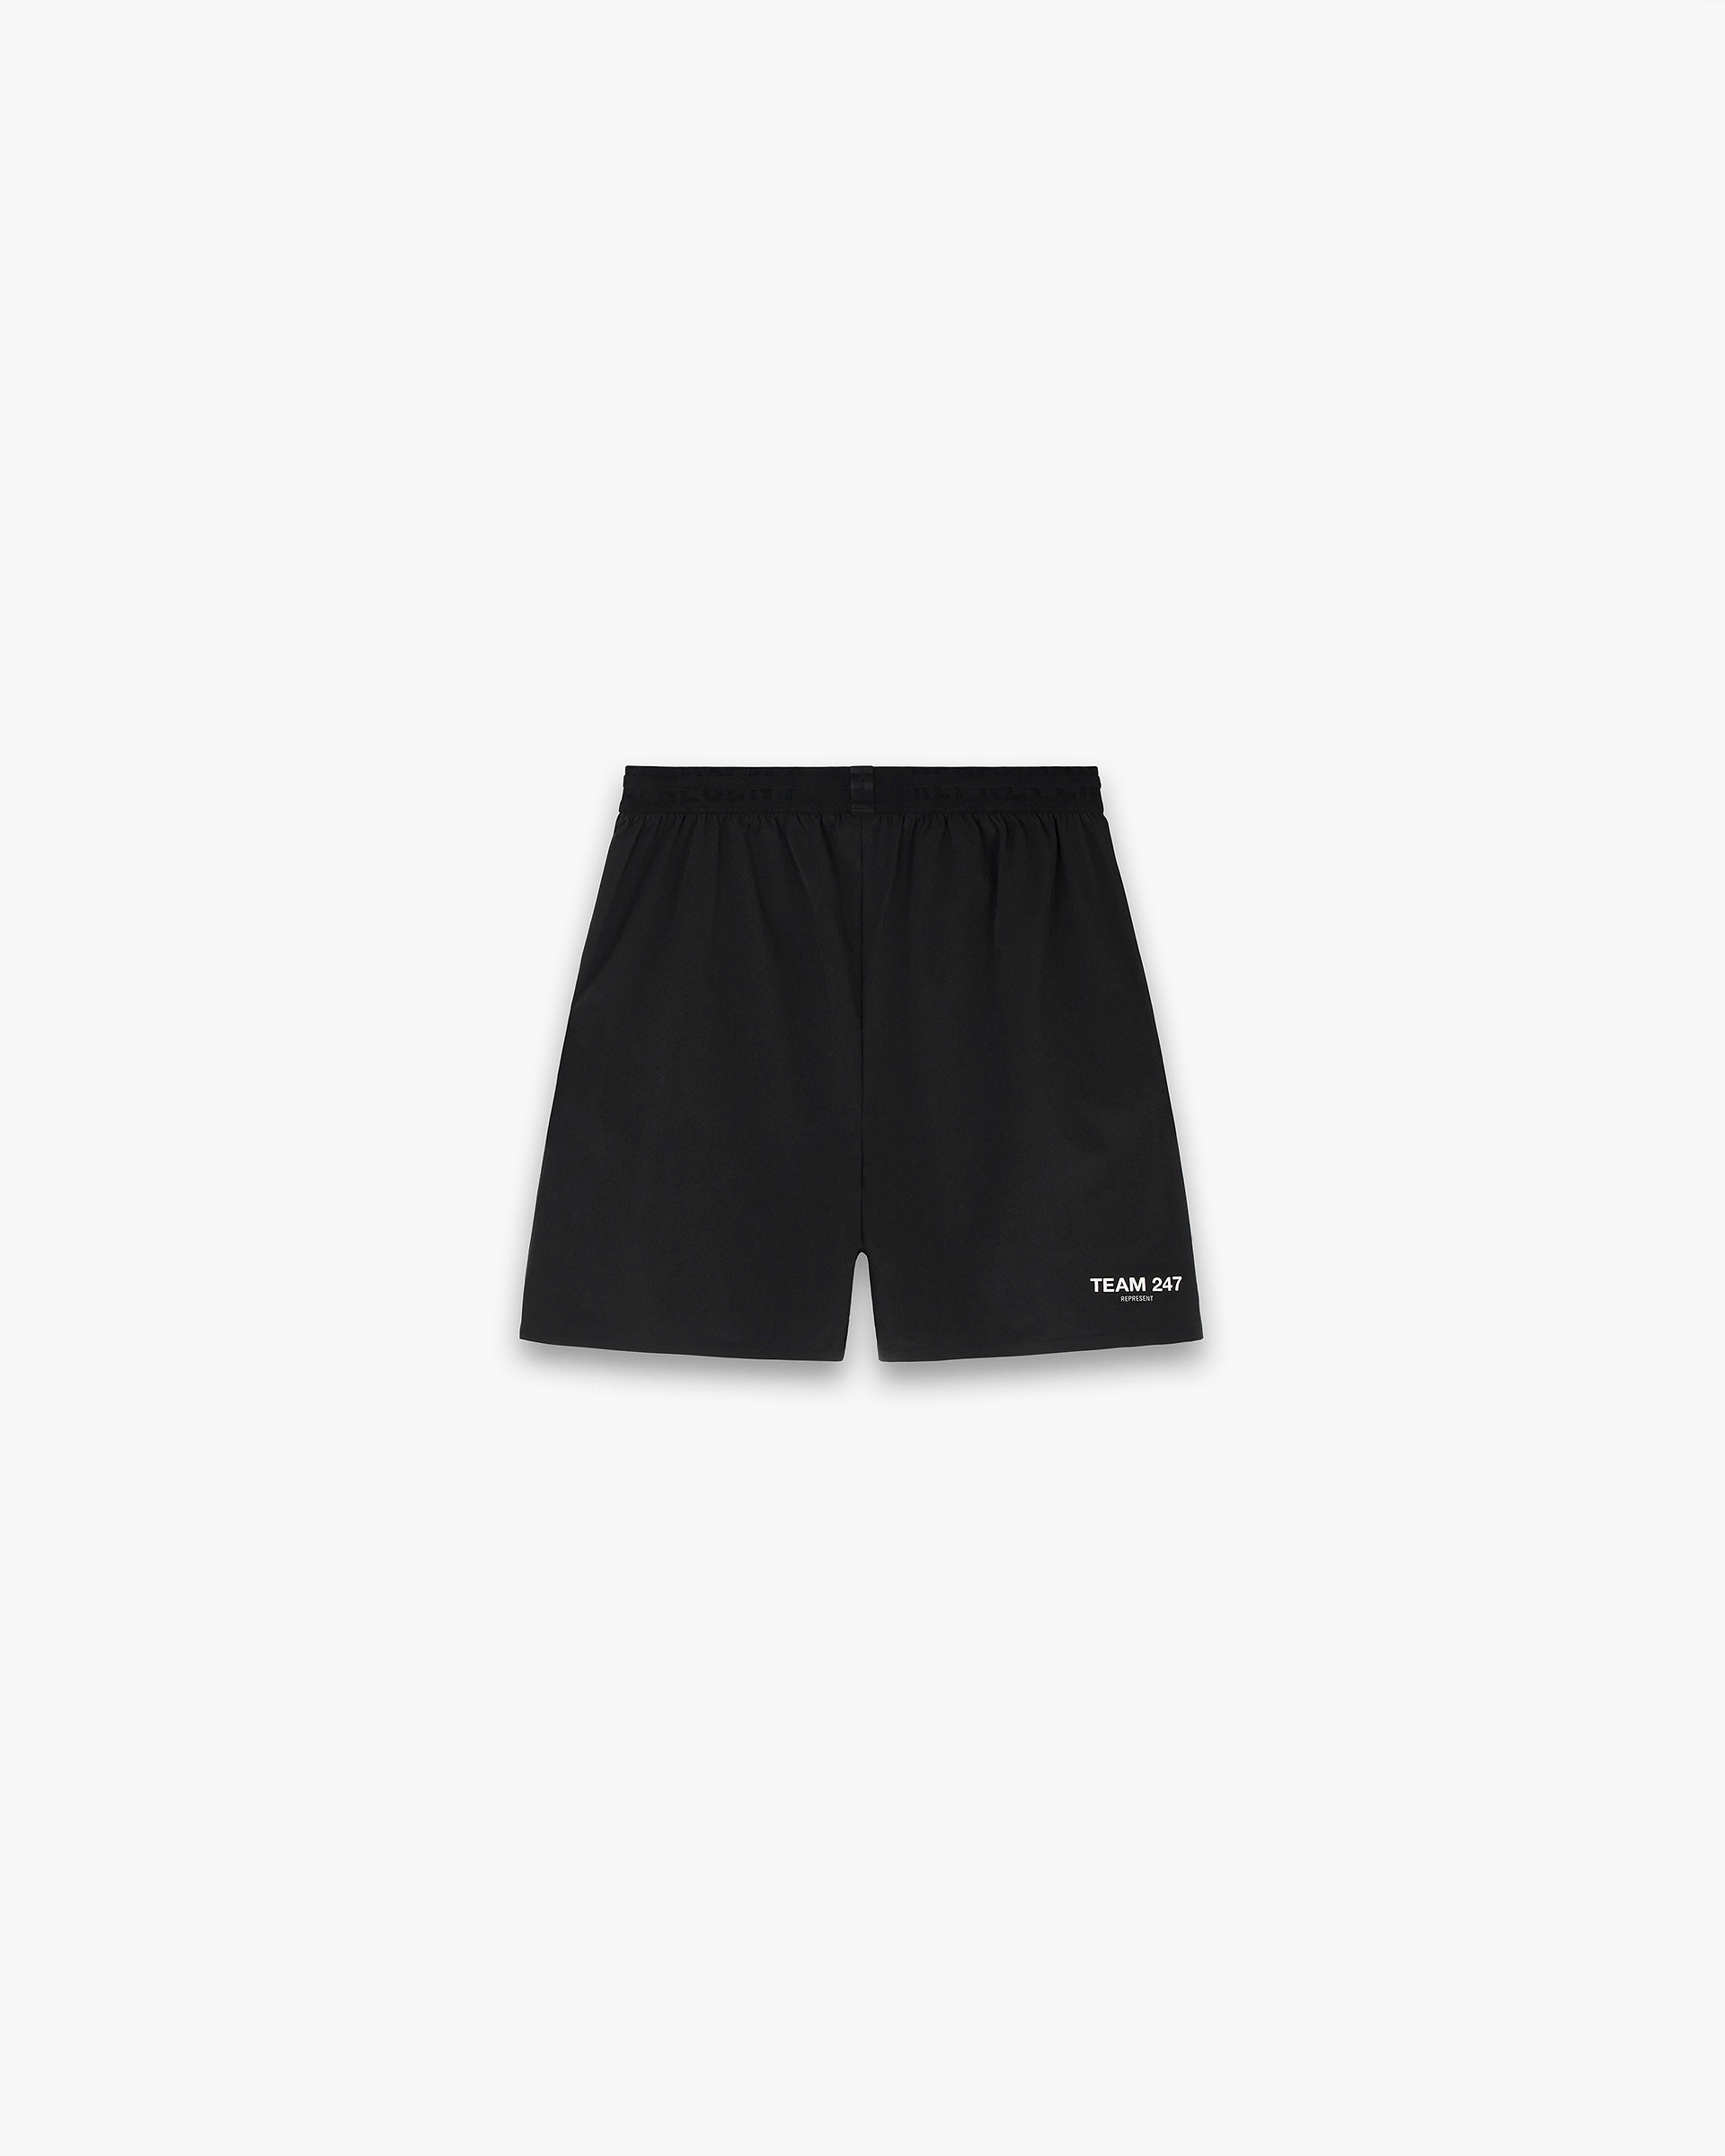 Shorts REPRESENT CLO 247 Gym | Shorts |